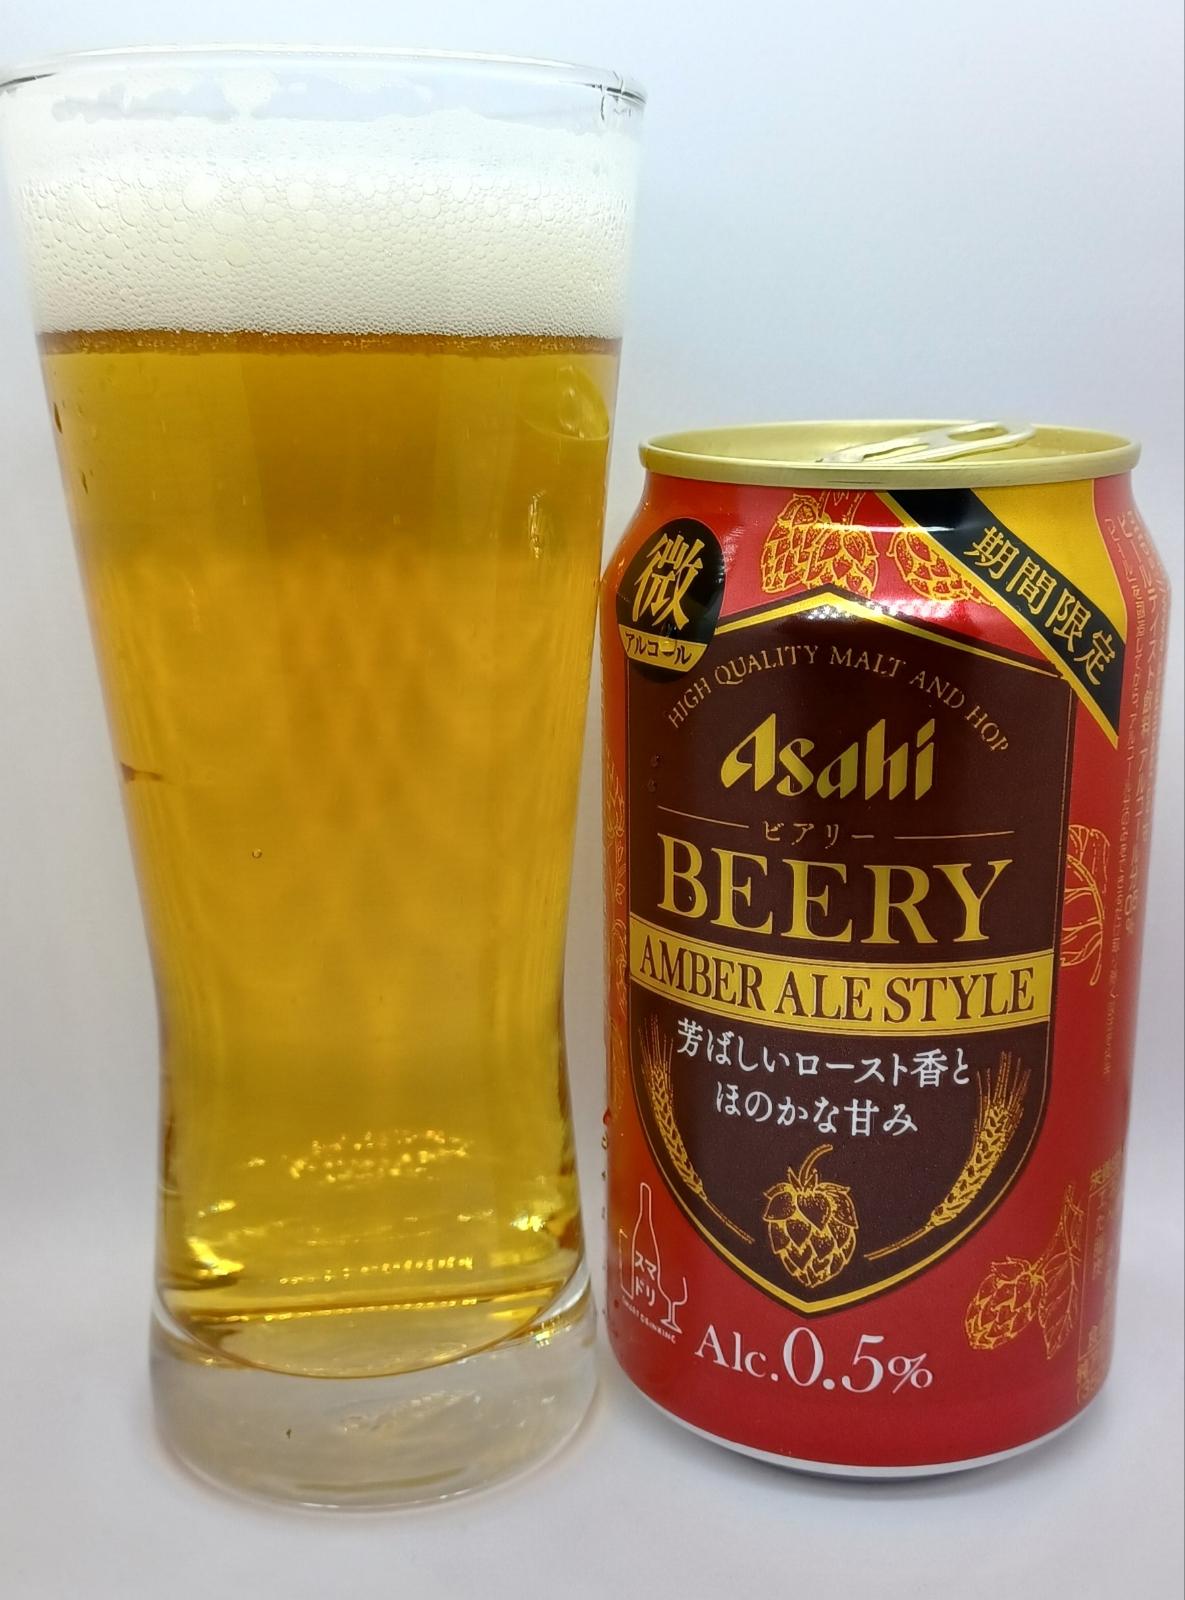 Asahi Beery - Amber Style Ale